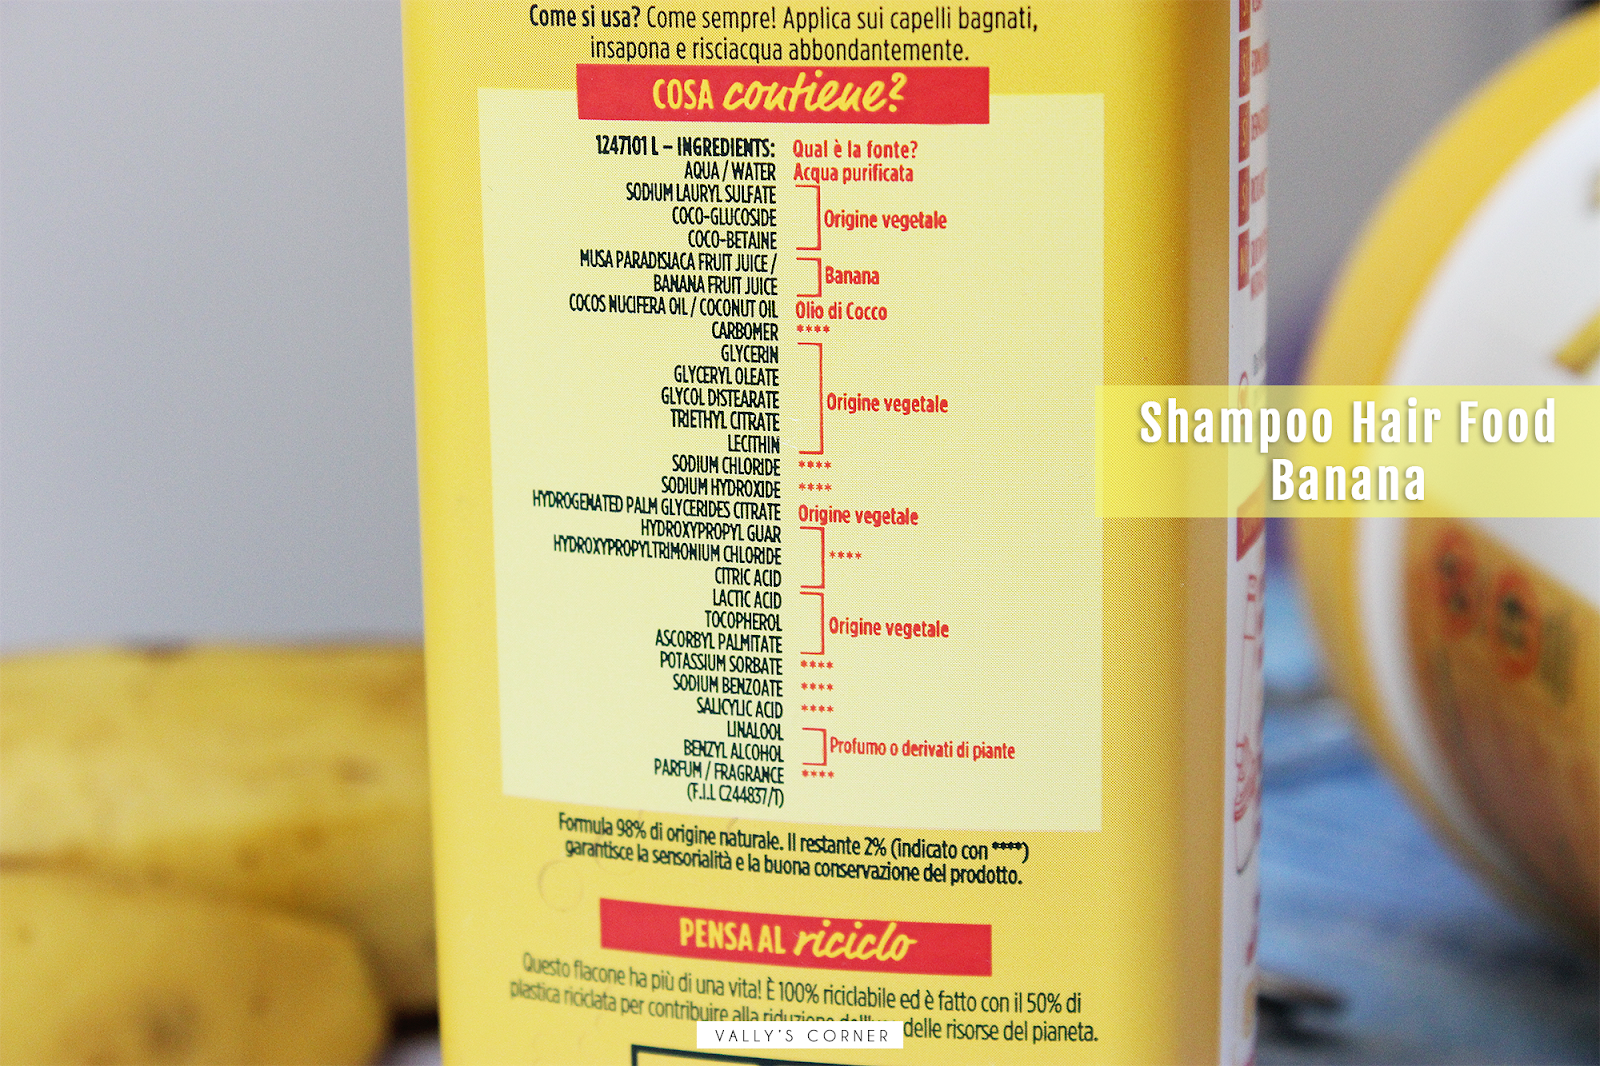 Review Garnier Hair Food Shampoo Balsamo Banana V A L L Y S C O R N E R